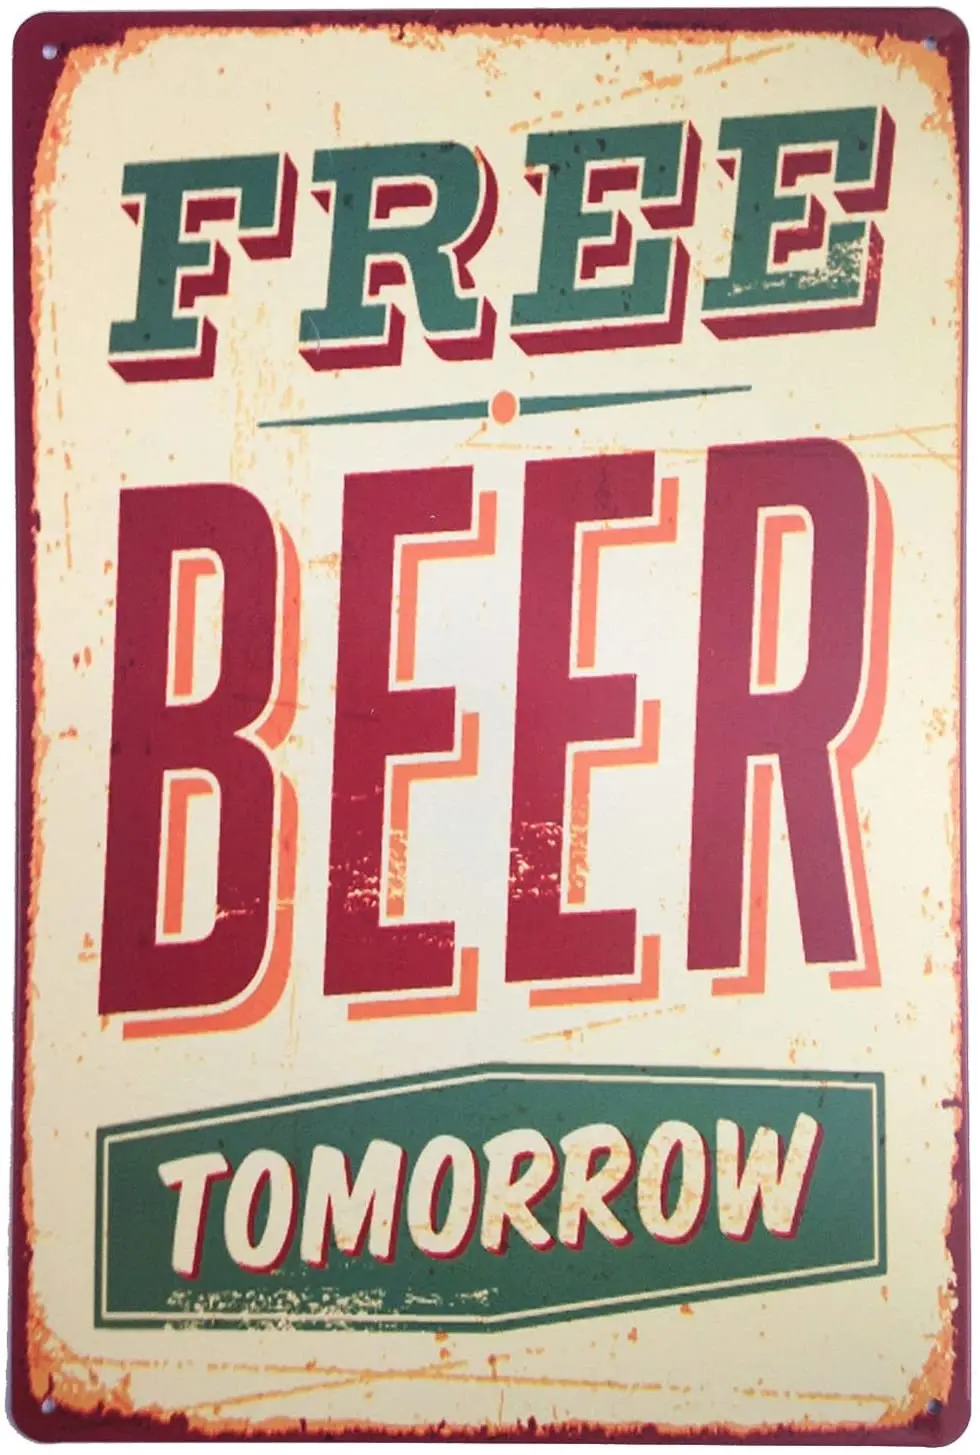 

ERLOOD Free Beer Tomorrow Funny Metal Vintage Tin Signs Bar Wall Decor Plaque 12" X 8"